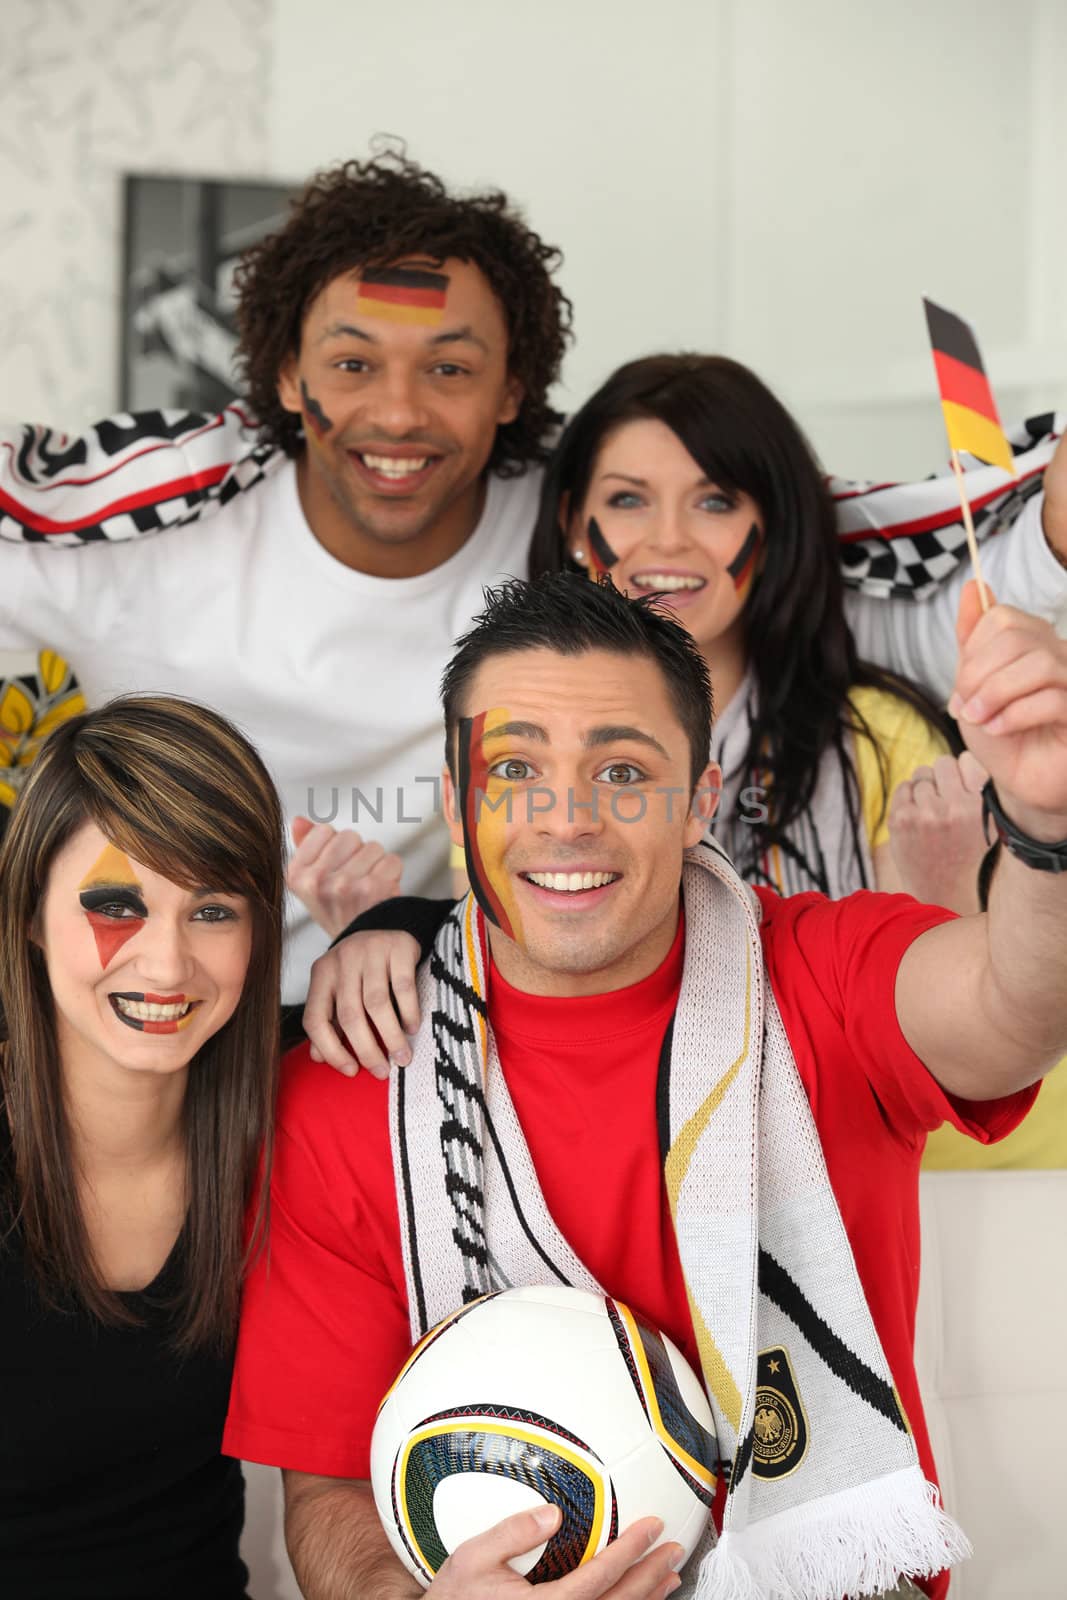 German football fans